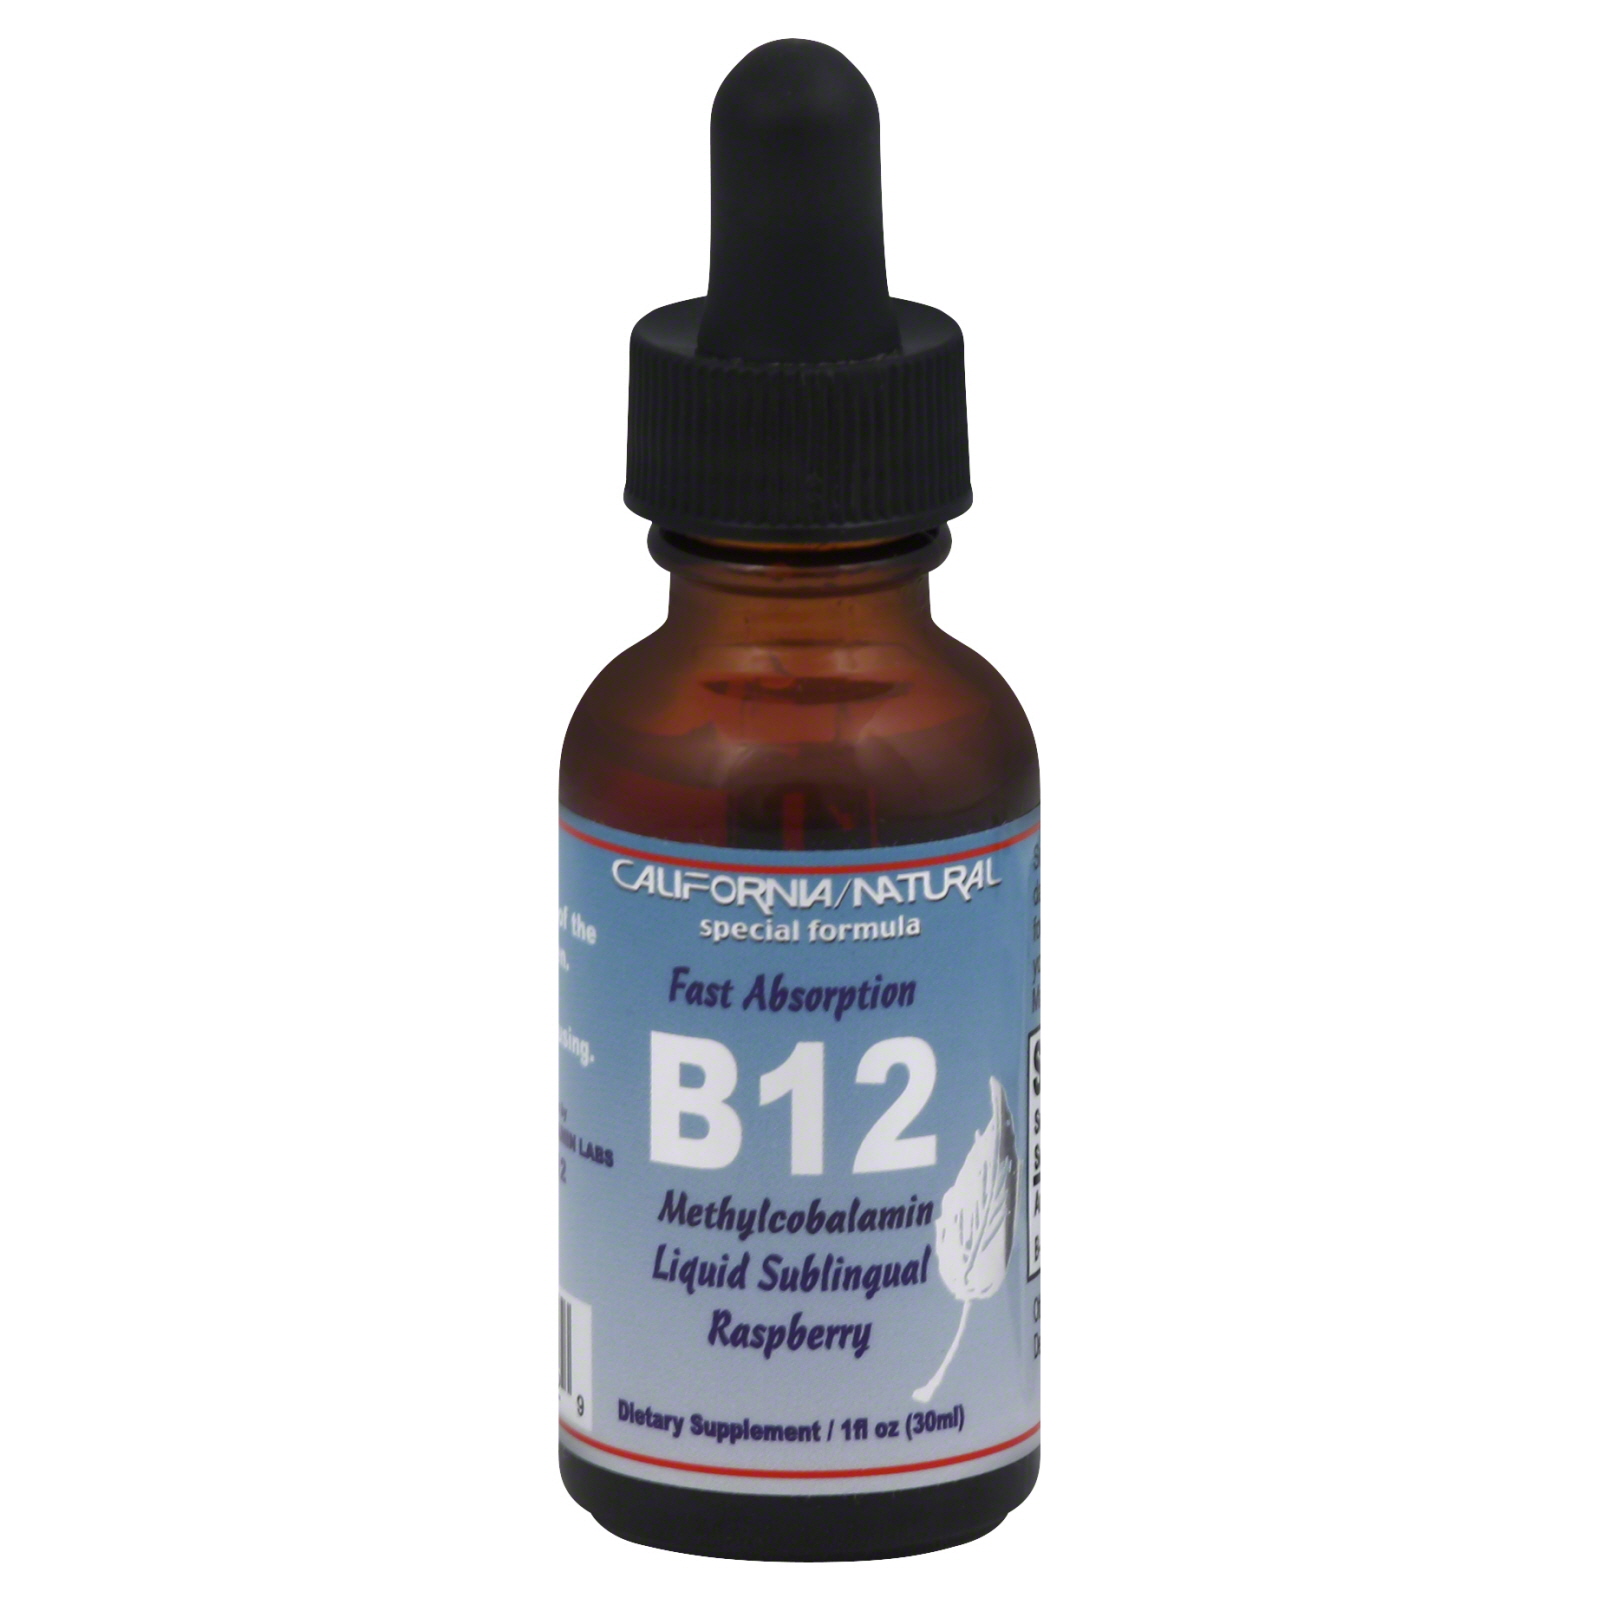 Special Formula B12, Methylcobalamin, Liquid Sublingual, Raspberry, 1 fl oz (30 ml)